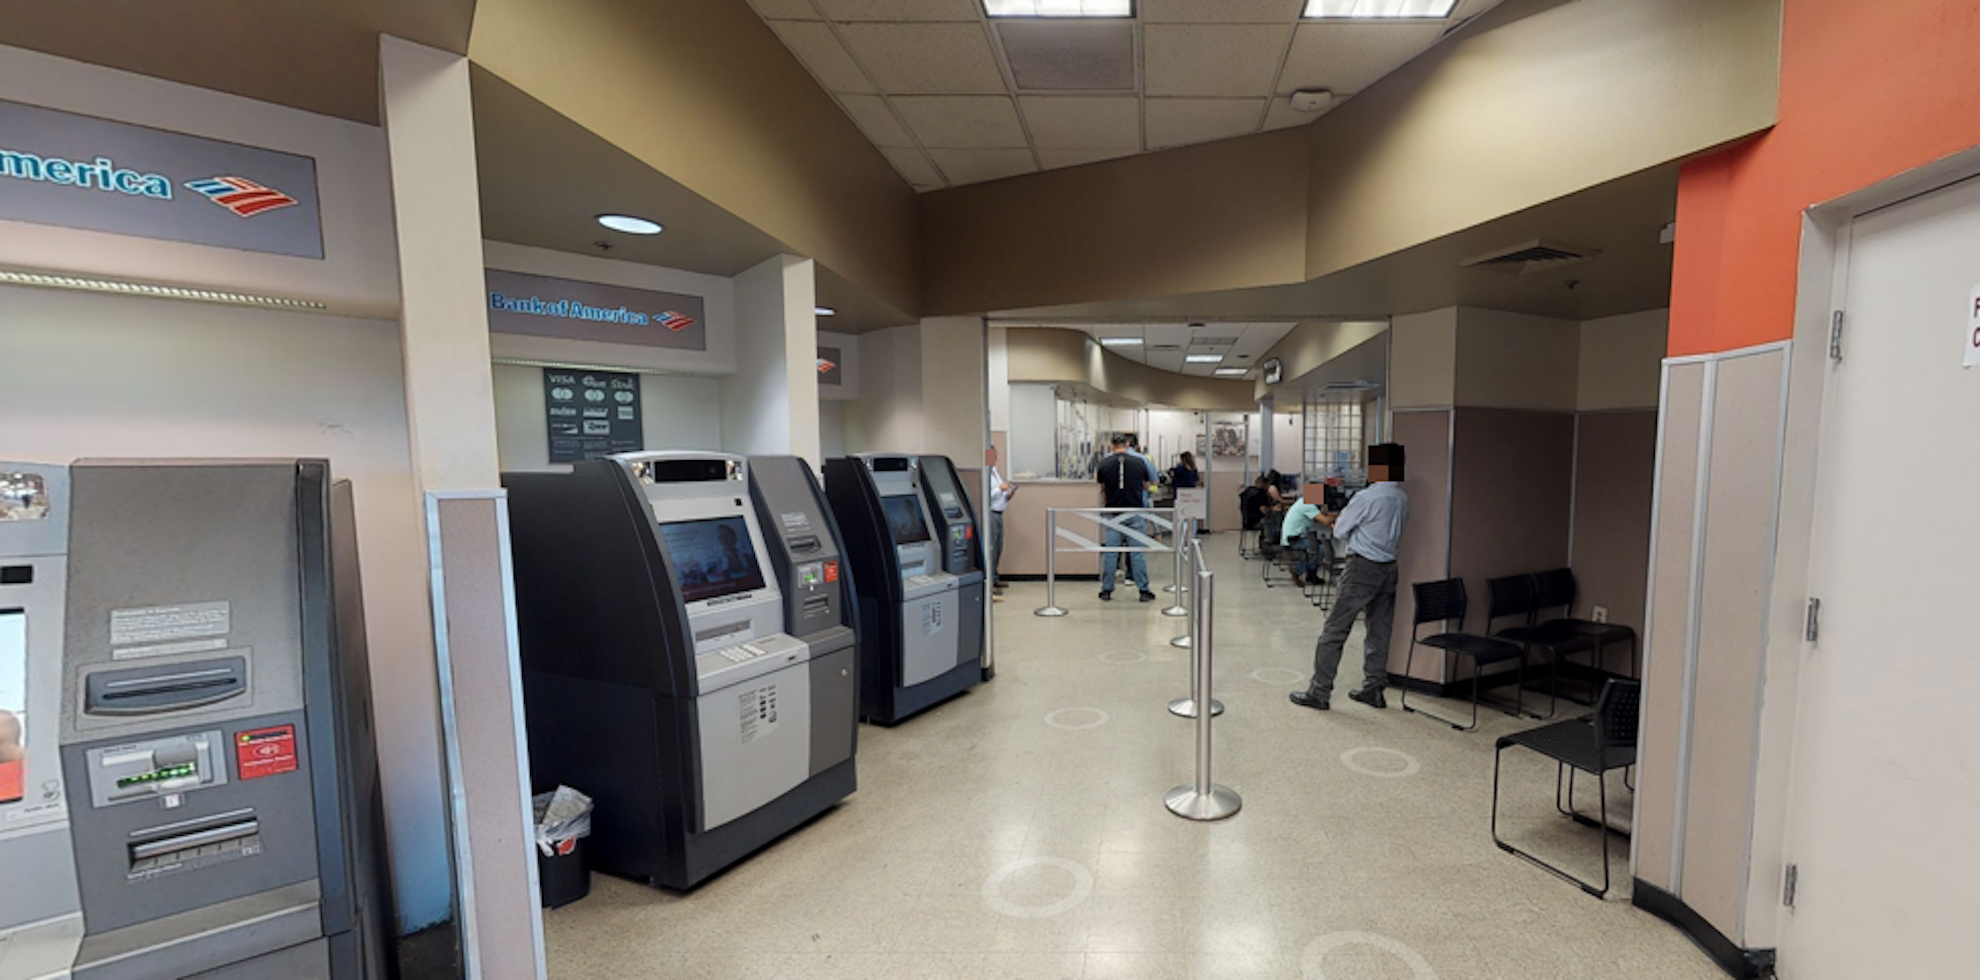 Bank of America financial center with walk-up ATM | 4230 W McDowell Rd, Phoenix, AZ 85009